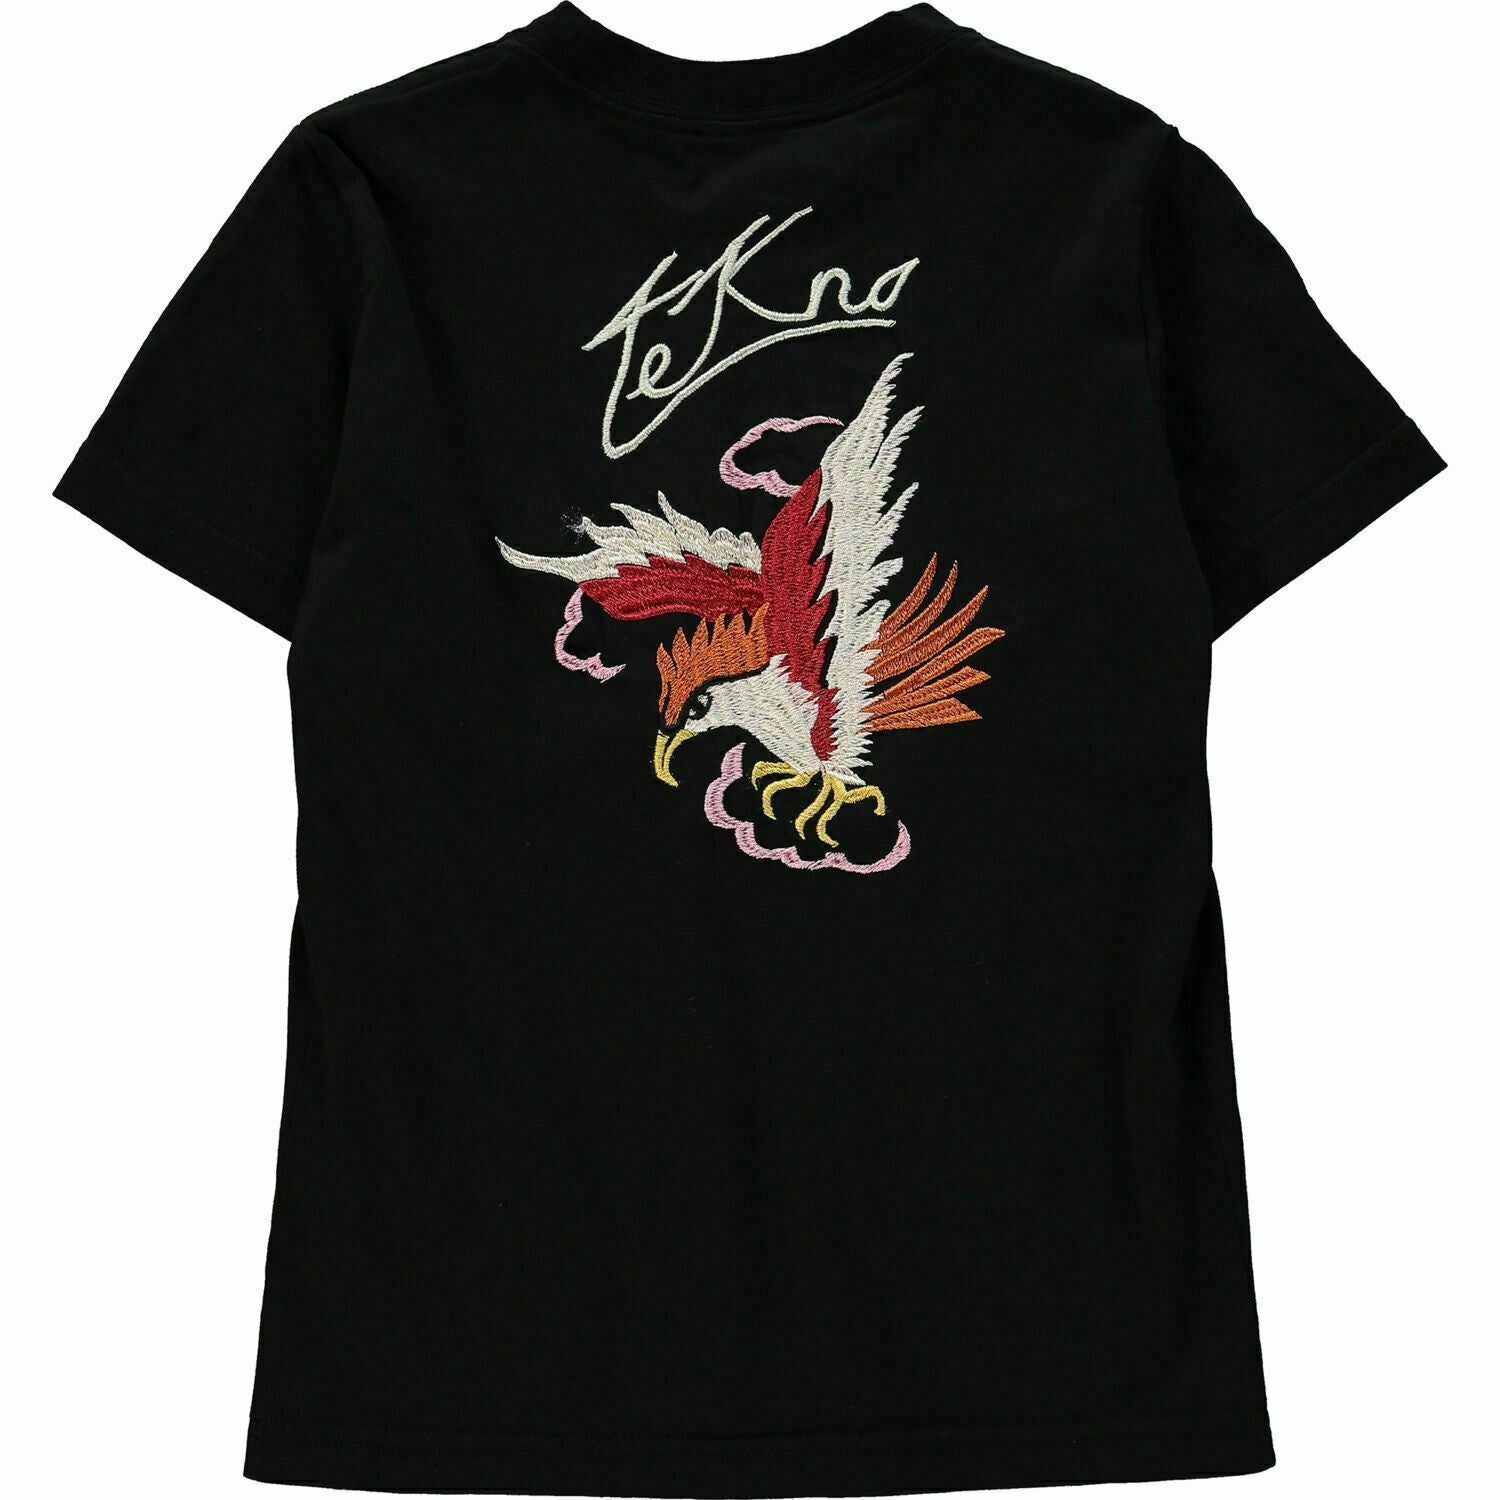 DIESEL Girls' Kids' T-DARIA Dragon Embroidery T-shirt, Black, size 6 years